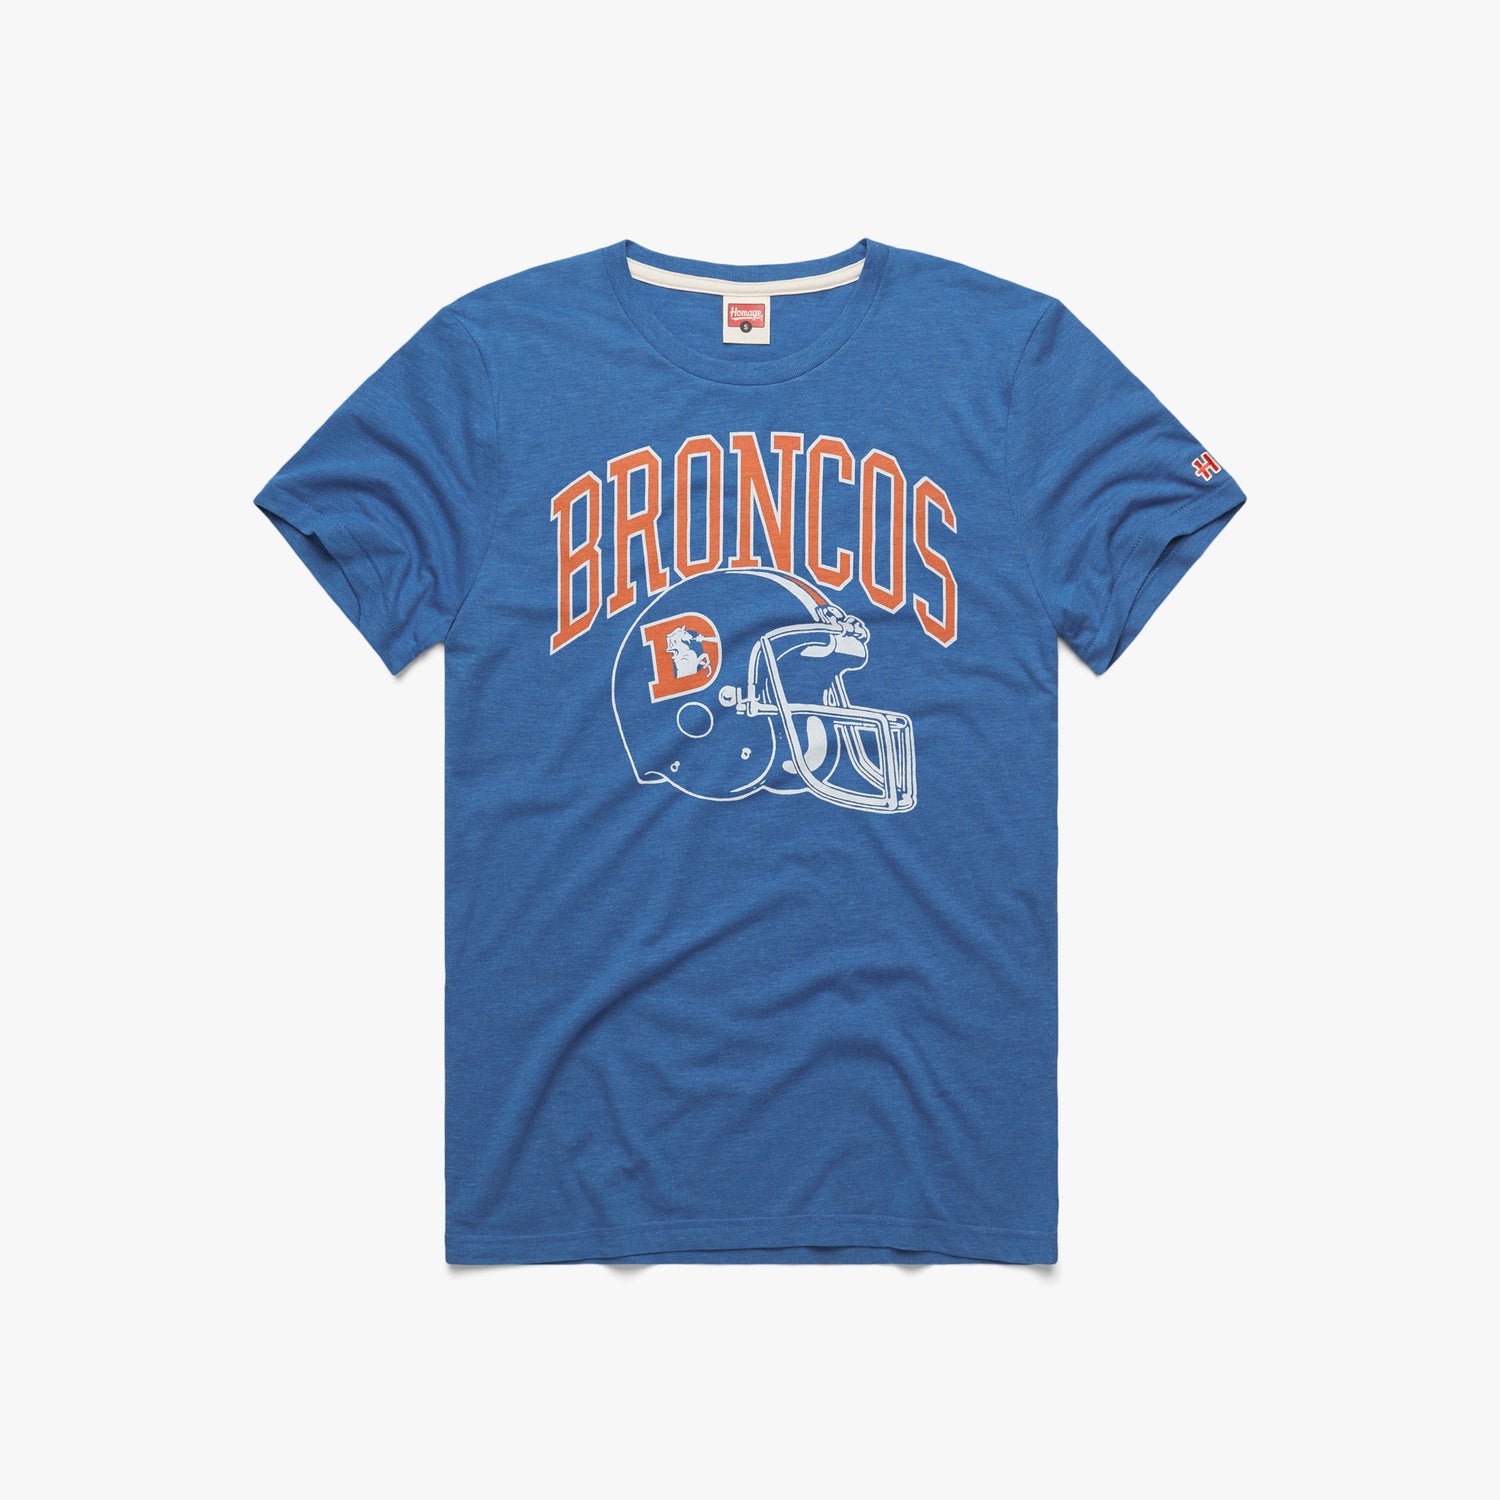 New York Knicks Vintage Jerseys & Retro Shirts for Sale